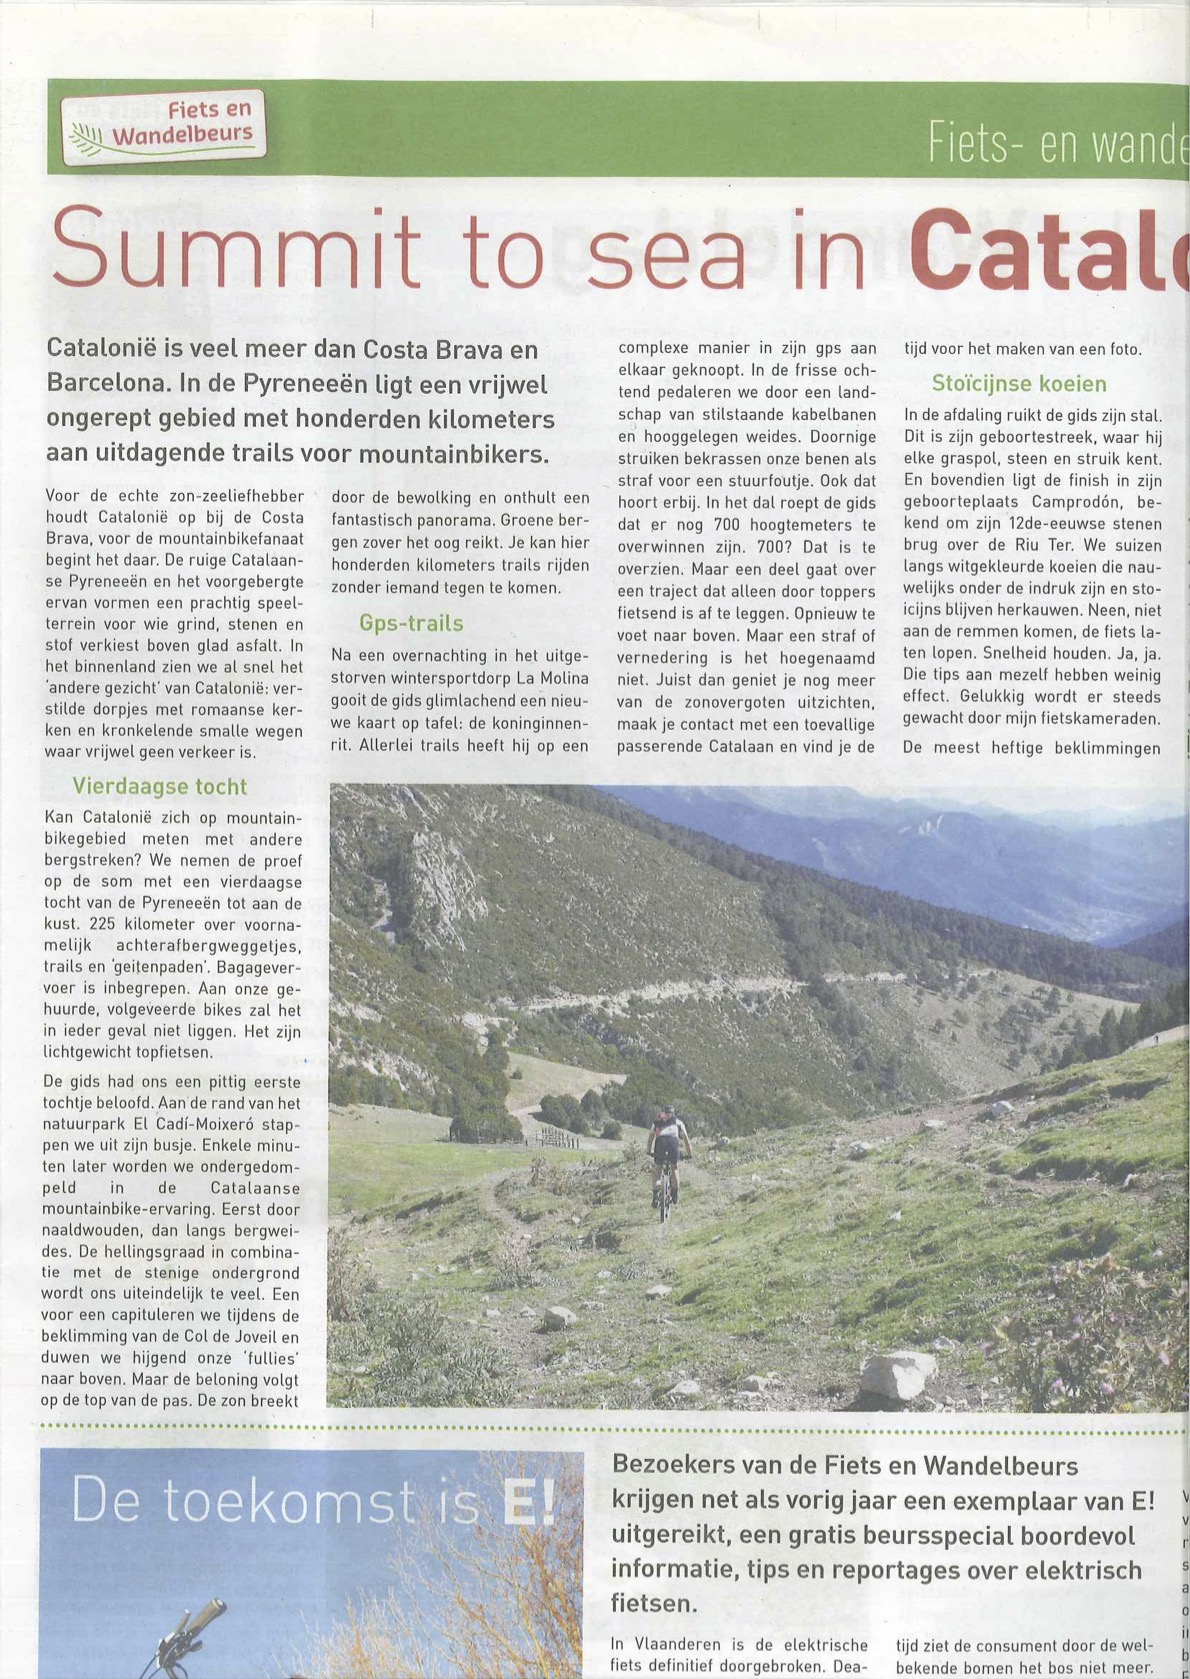 Summit to sea in Catalonia